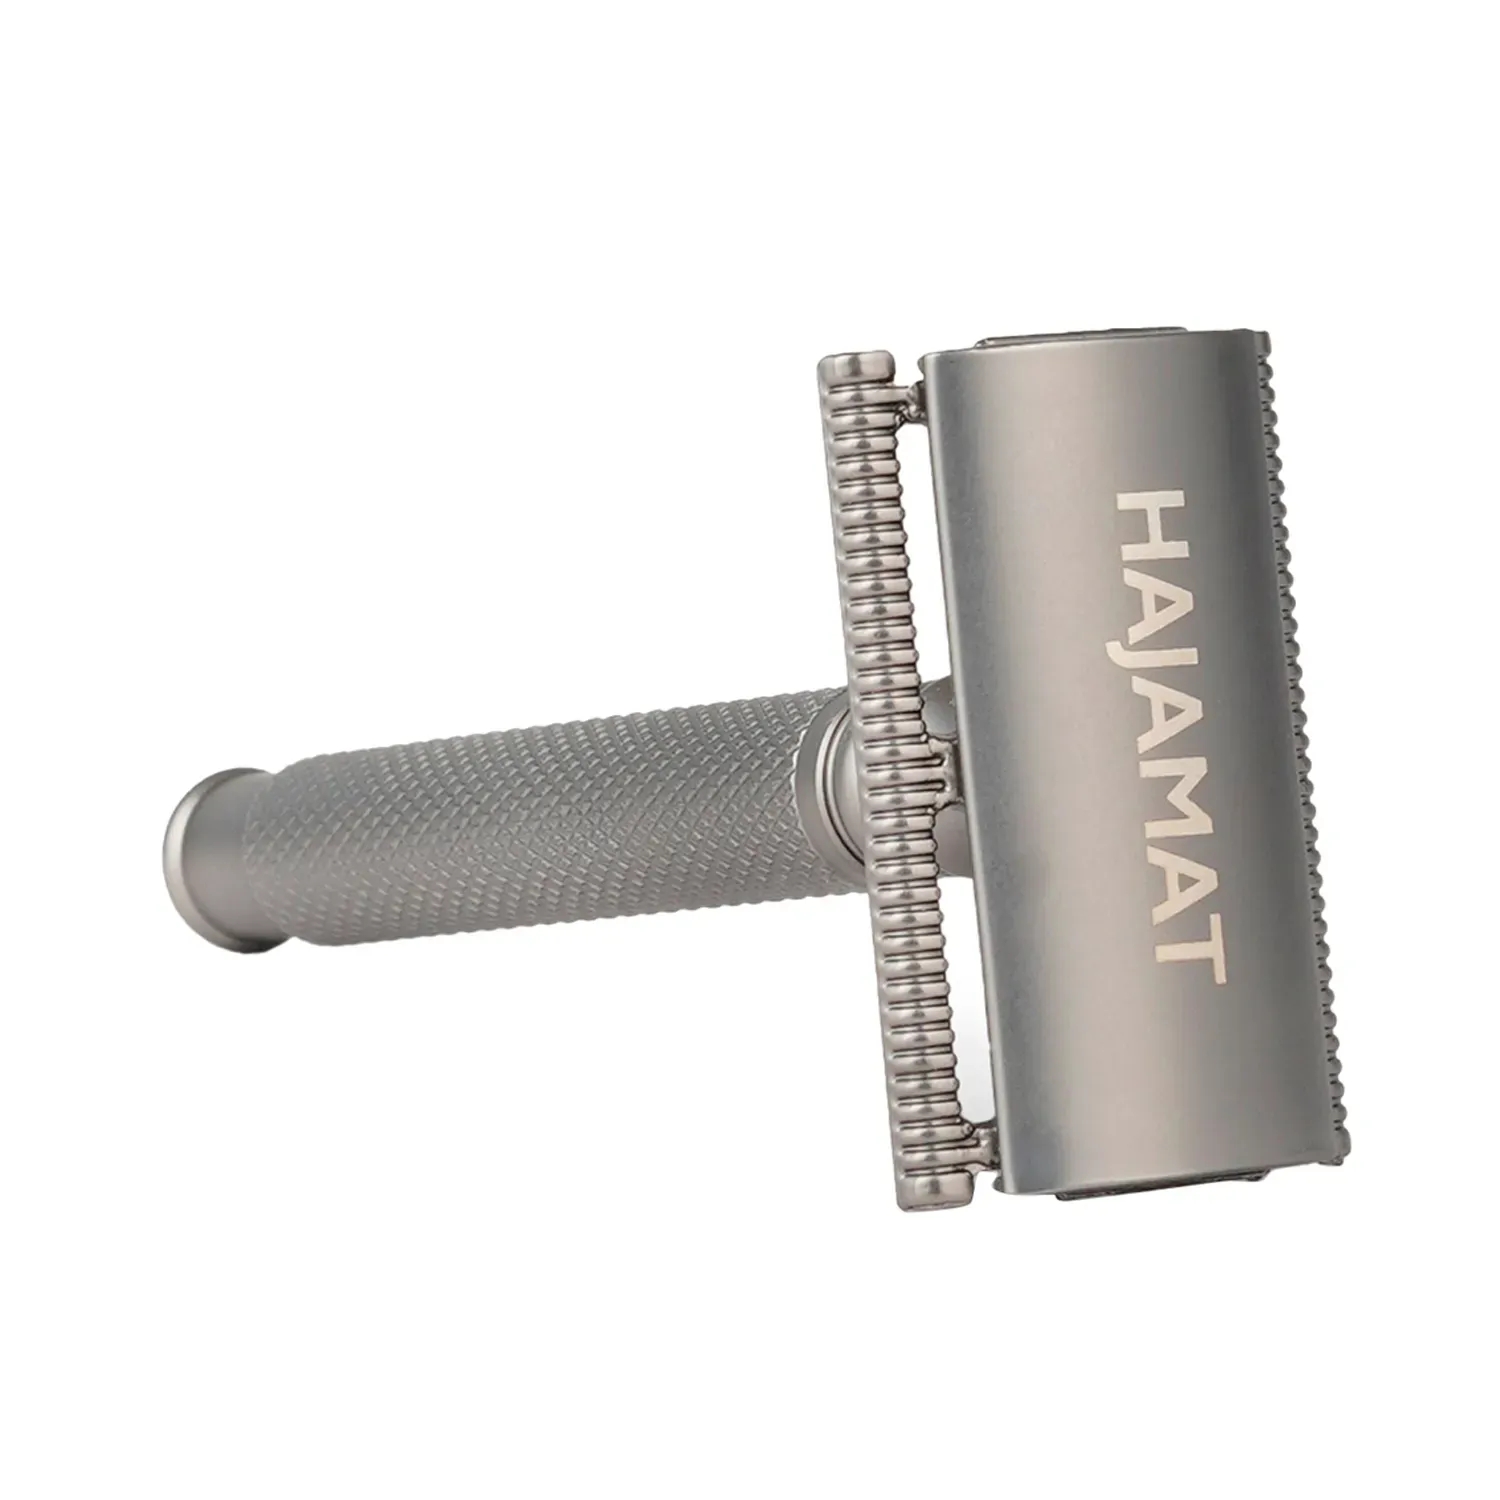 Hajamat Spade Double Edge Safety Razor, Stainless Steel 304, Gunmetal Finish